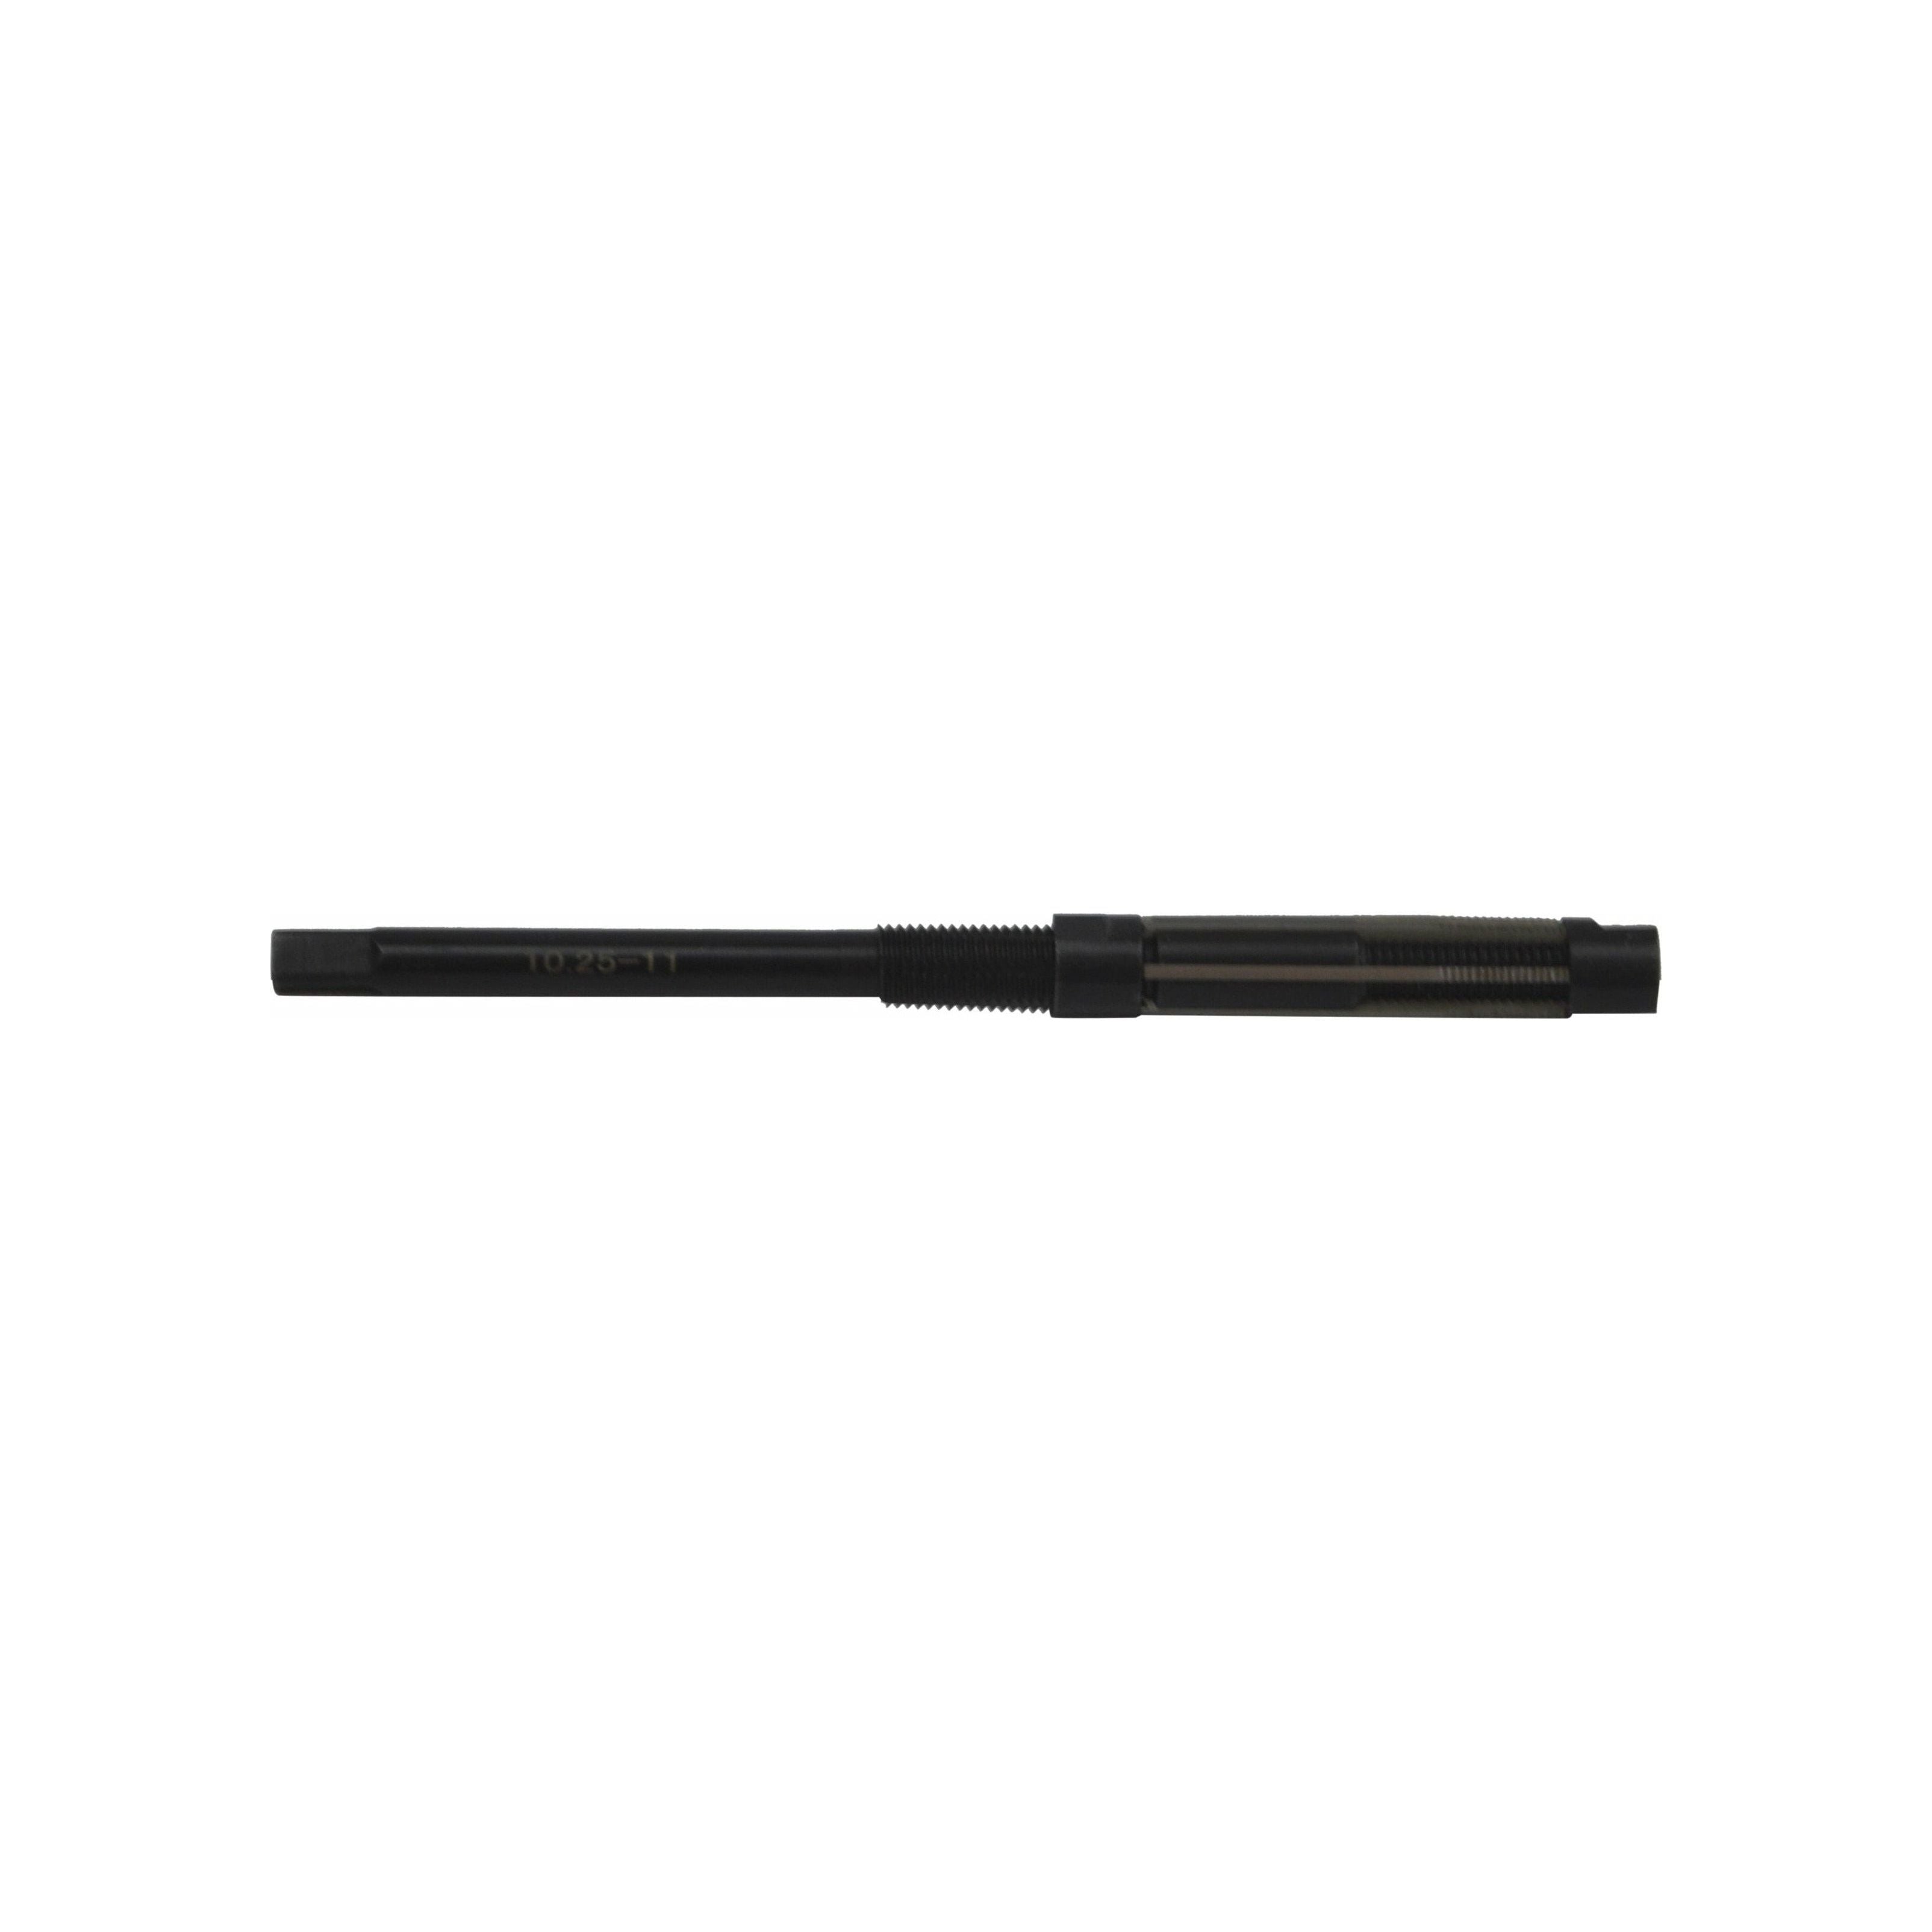 10.25 - 11 mm HSS Blade No Guide Adjustable Hand Reamer